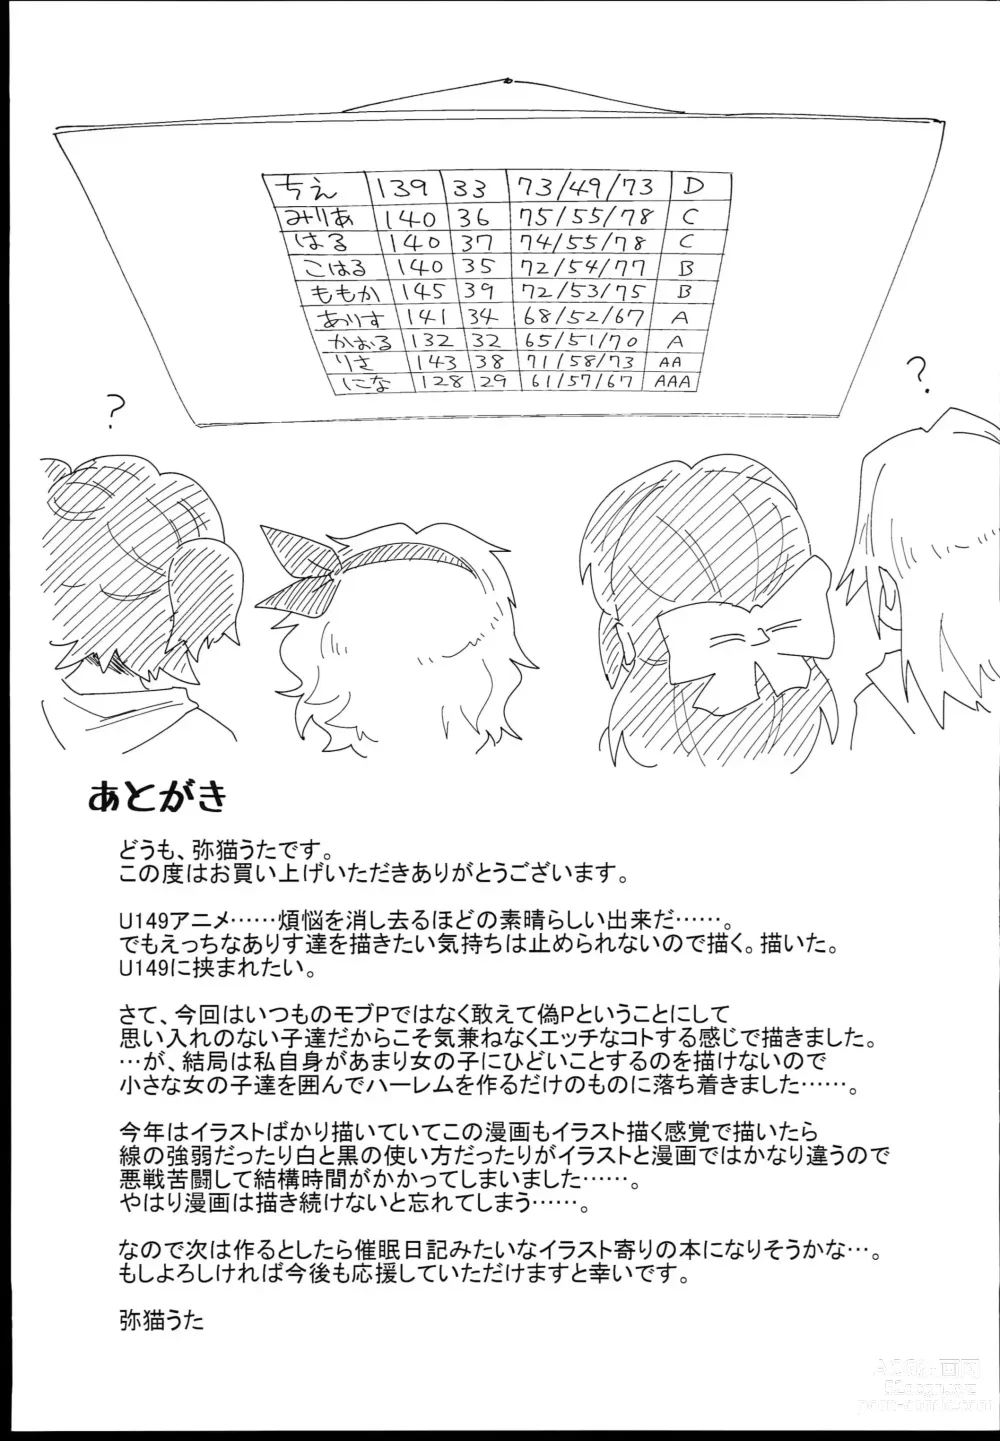 Page 25 of doujinshi U149에게 둘러싸이고 싶어